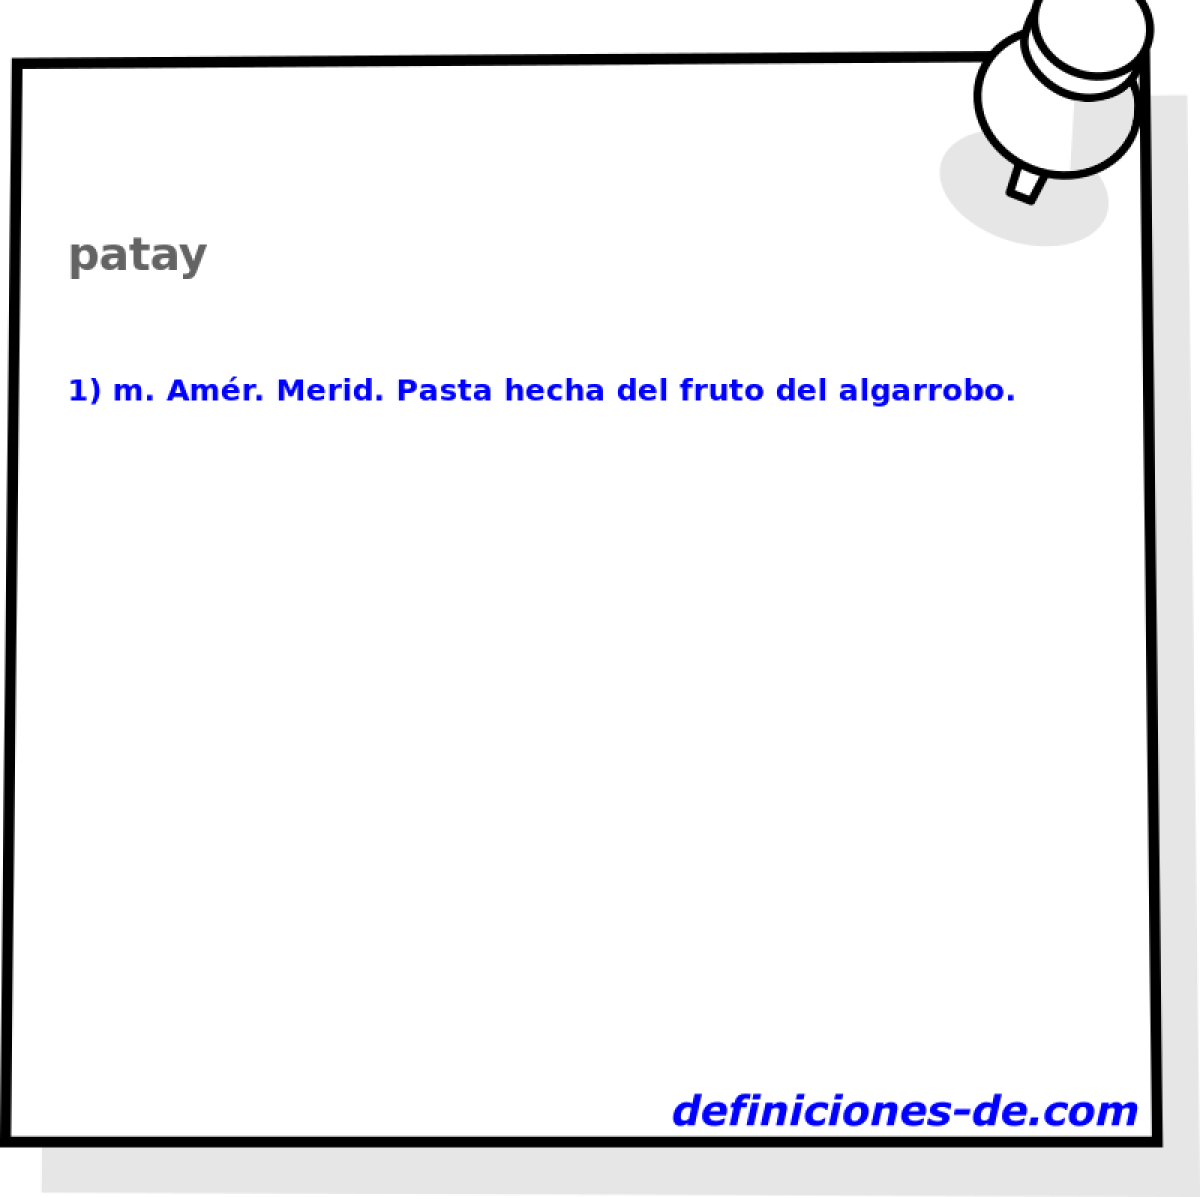 patay 